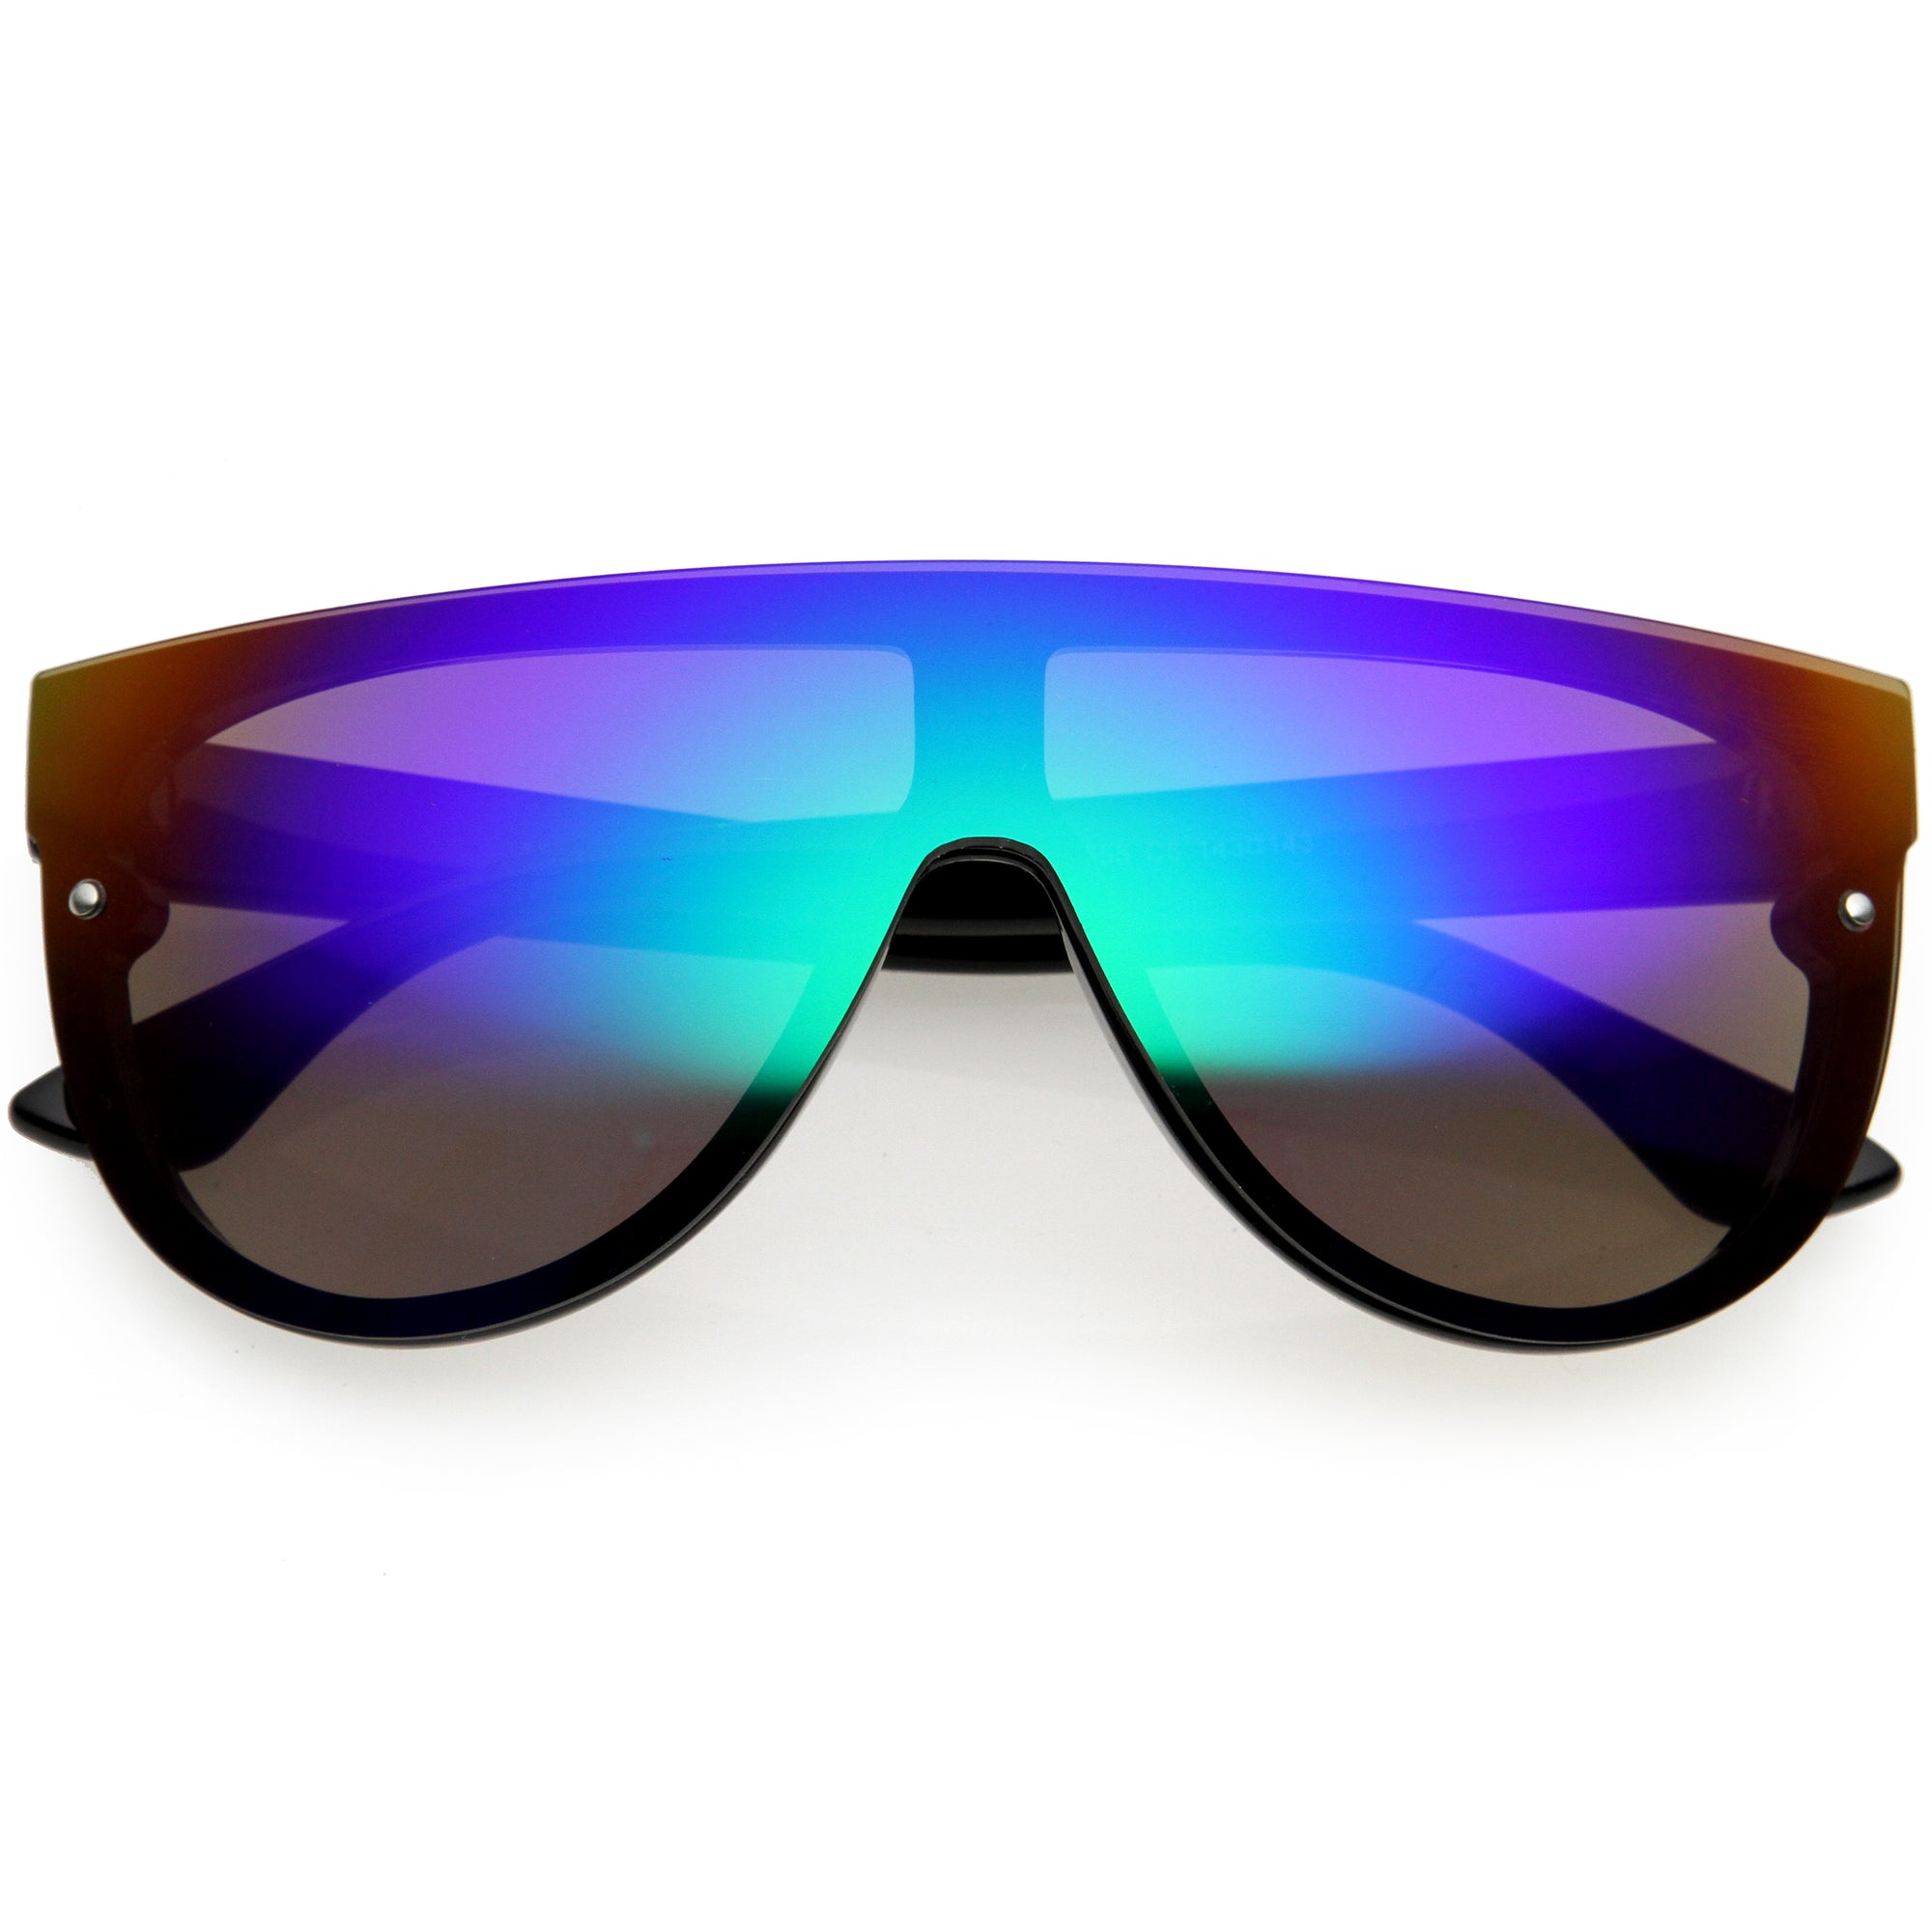 Mens Retro Super Flat Top Aviator Square Sunglasses - zeroUV